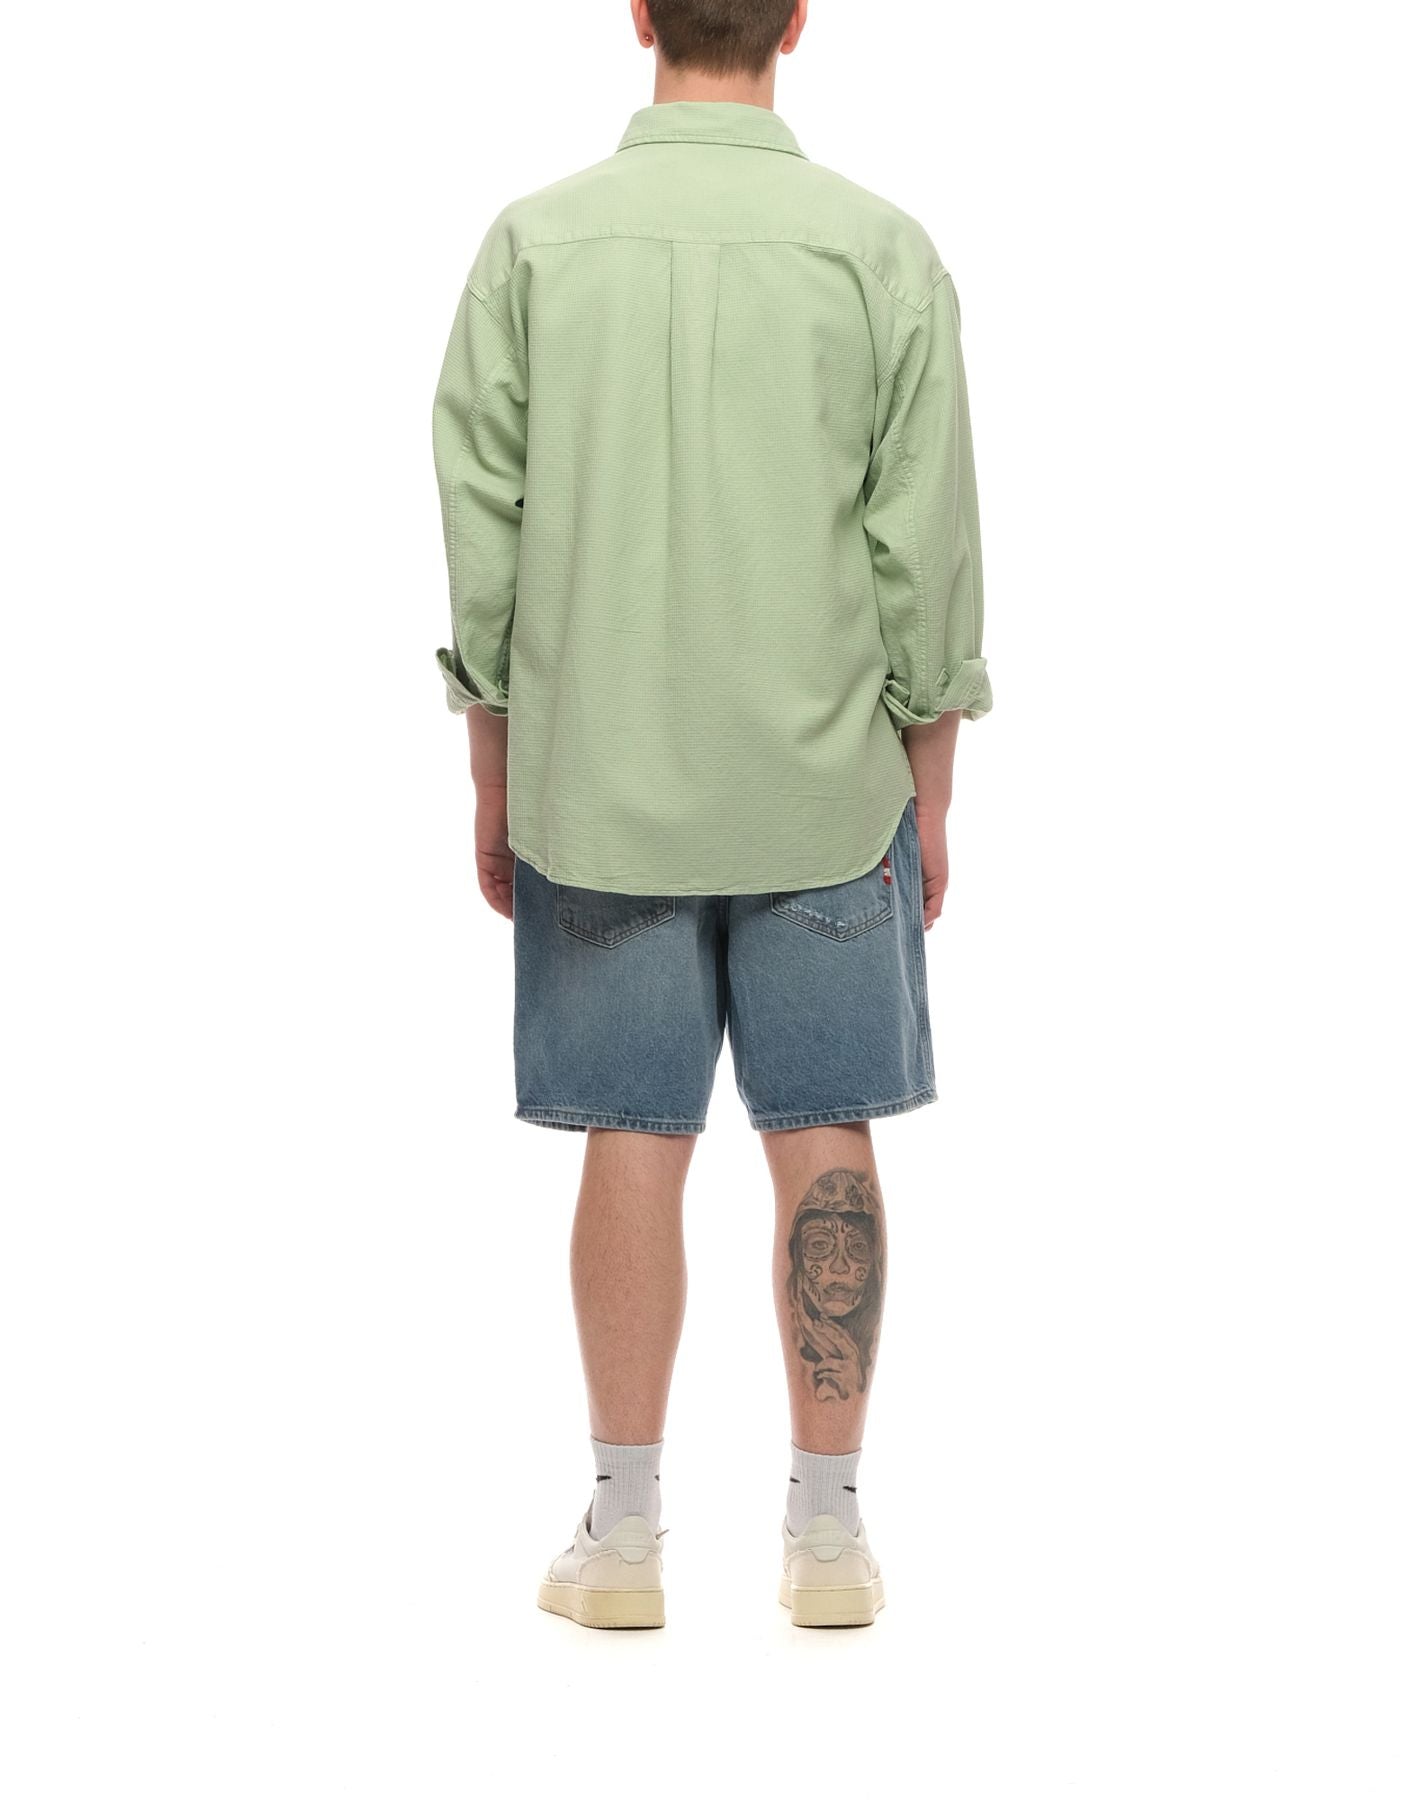 Camiseta man p23amx028p3730569 verde pálido Amish